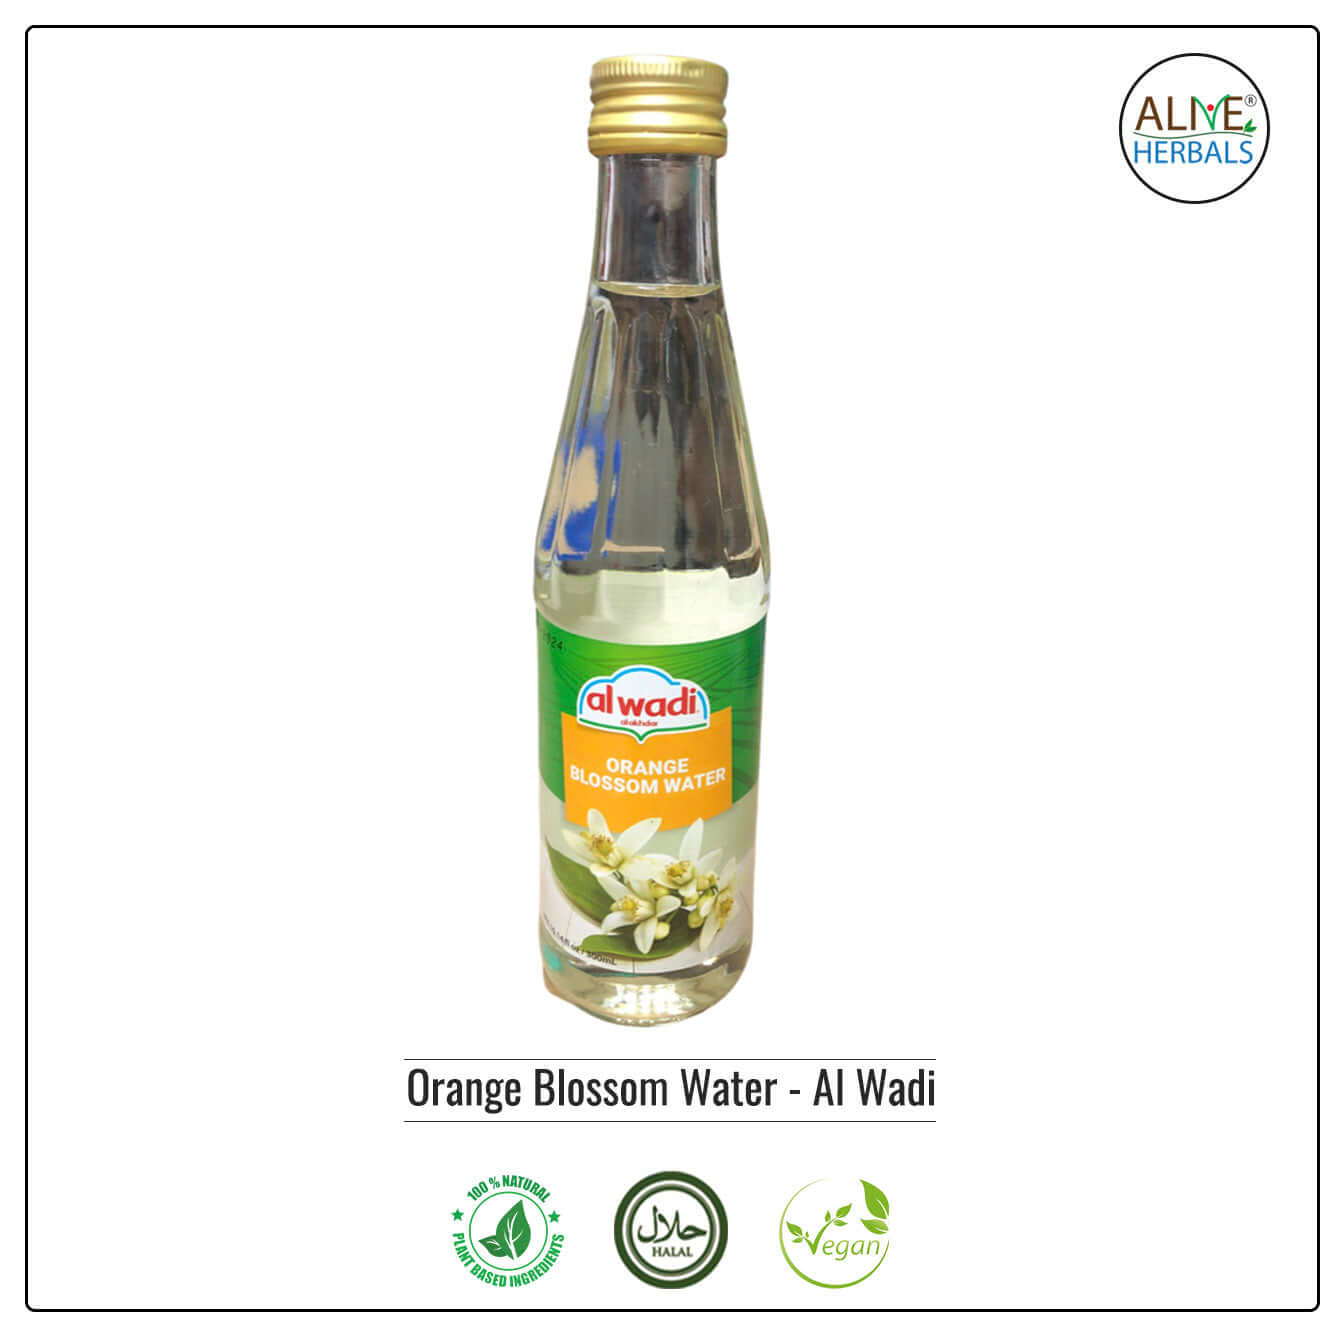 Orange Blossom Water (AL - WADI) - Buy at Natural Food Store | Alive Herbals.